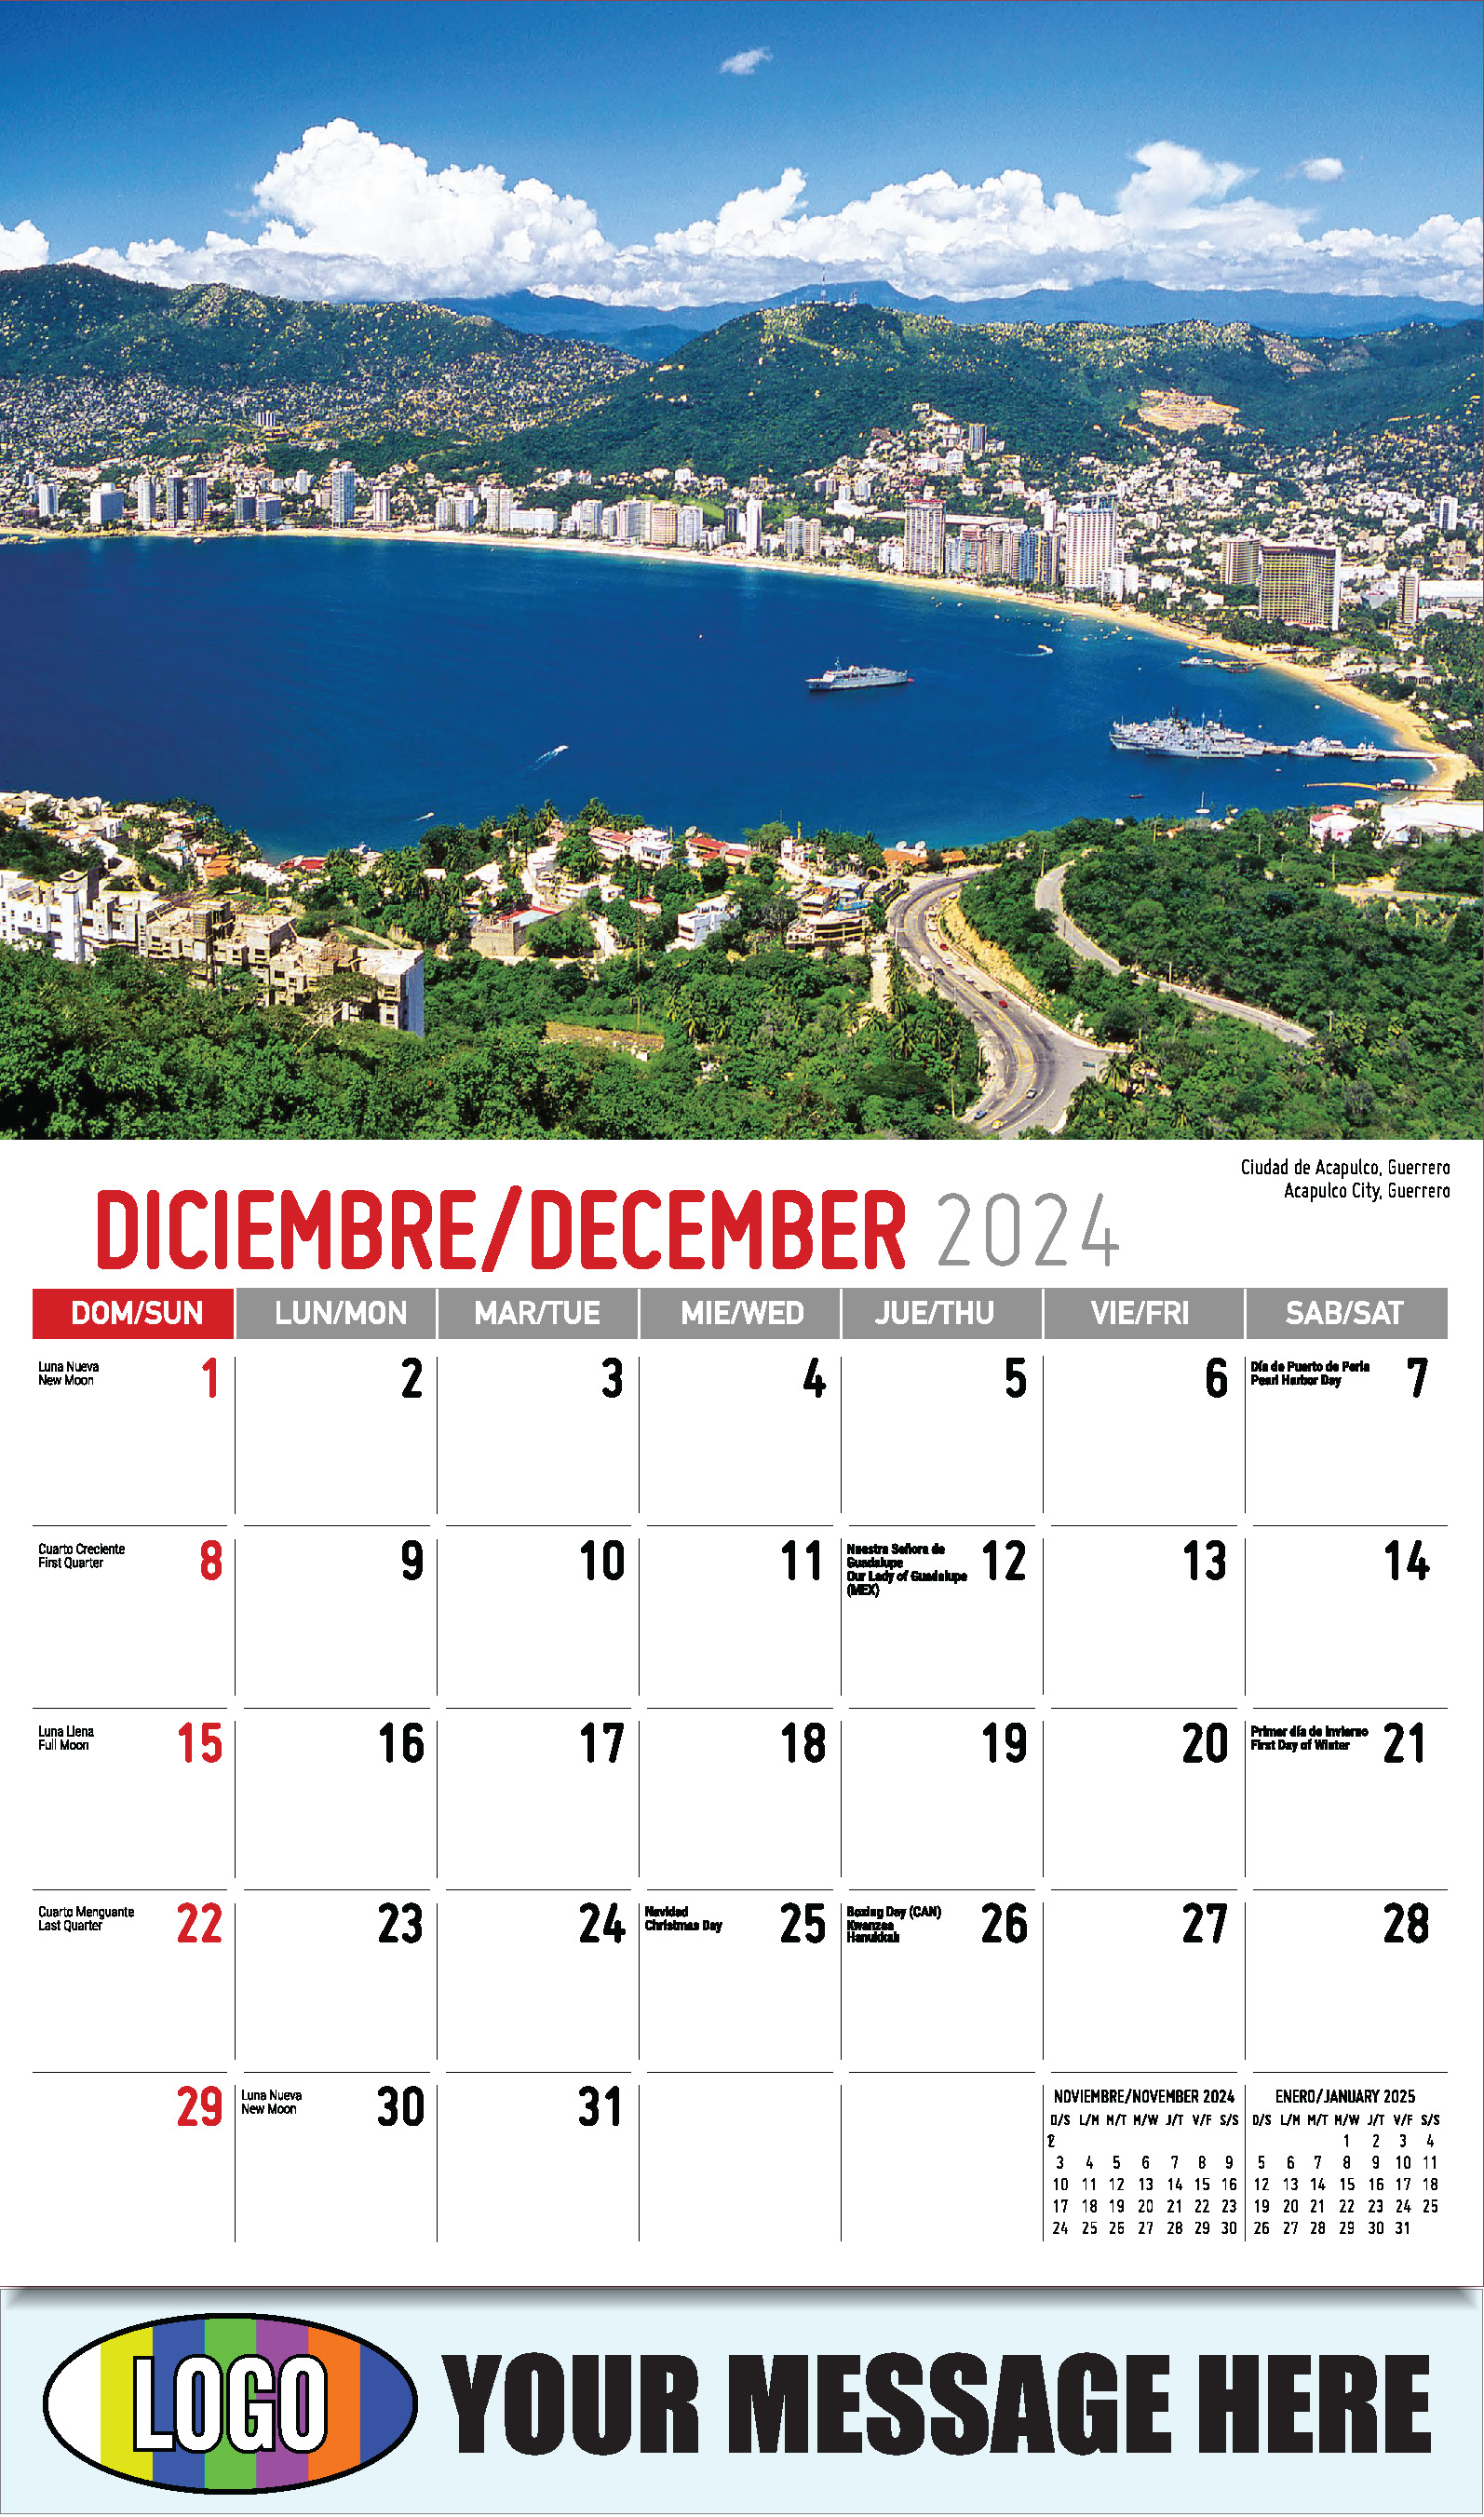 Scenes of Mexico 2025 Bilingual Business Promo Calendar - December_a